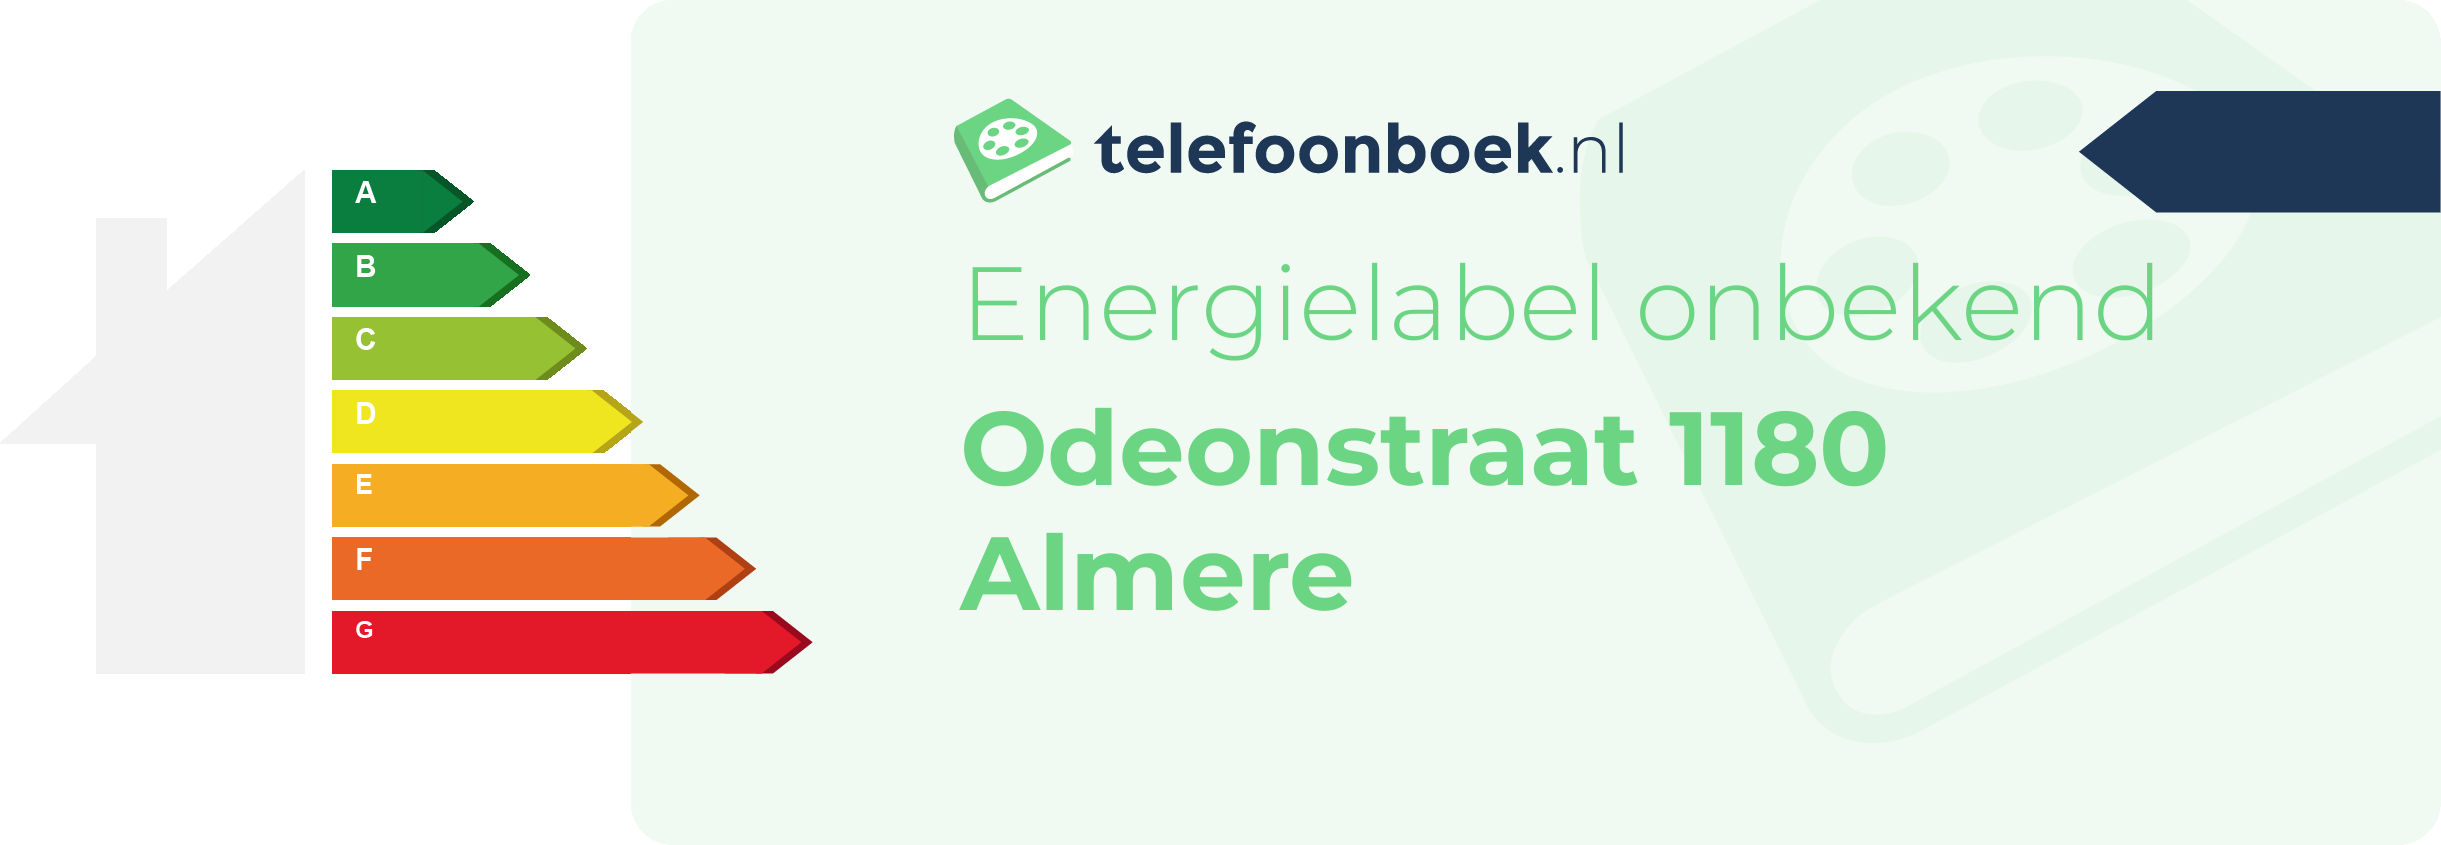 Energielabel Odeonstraat 1180 Almere